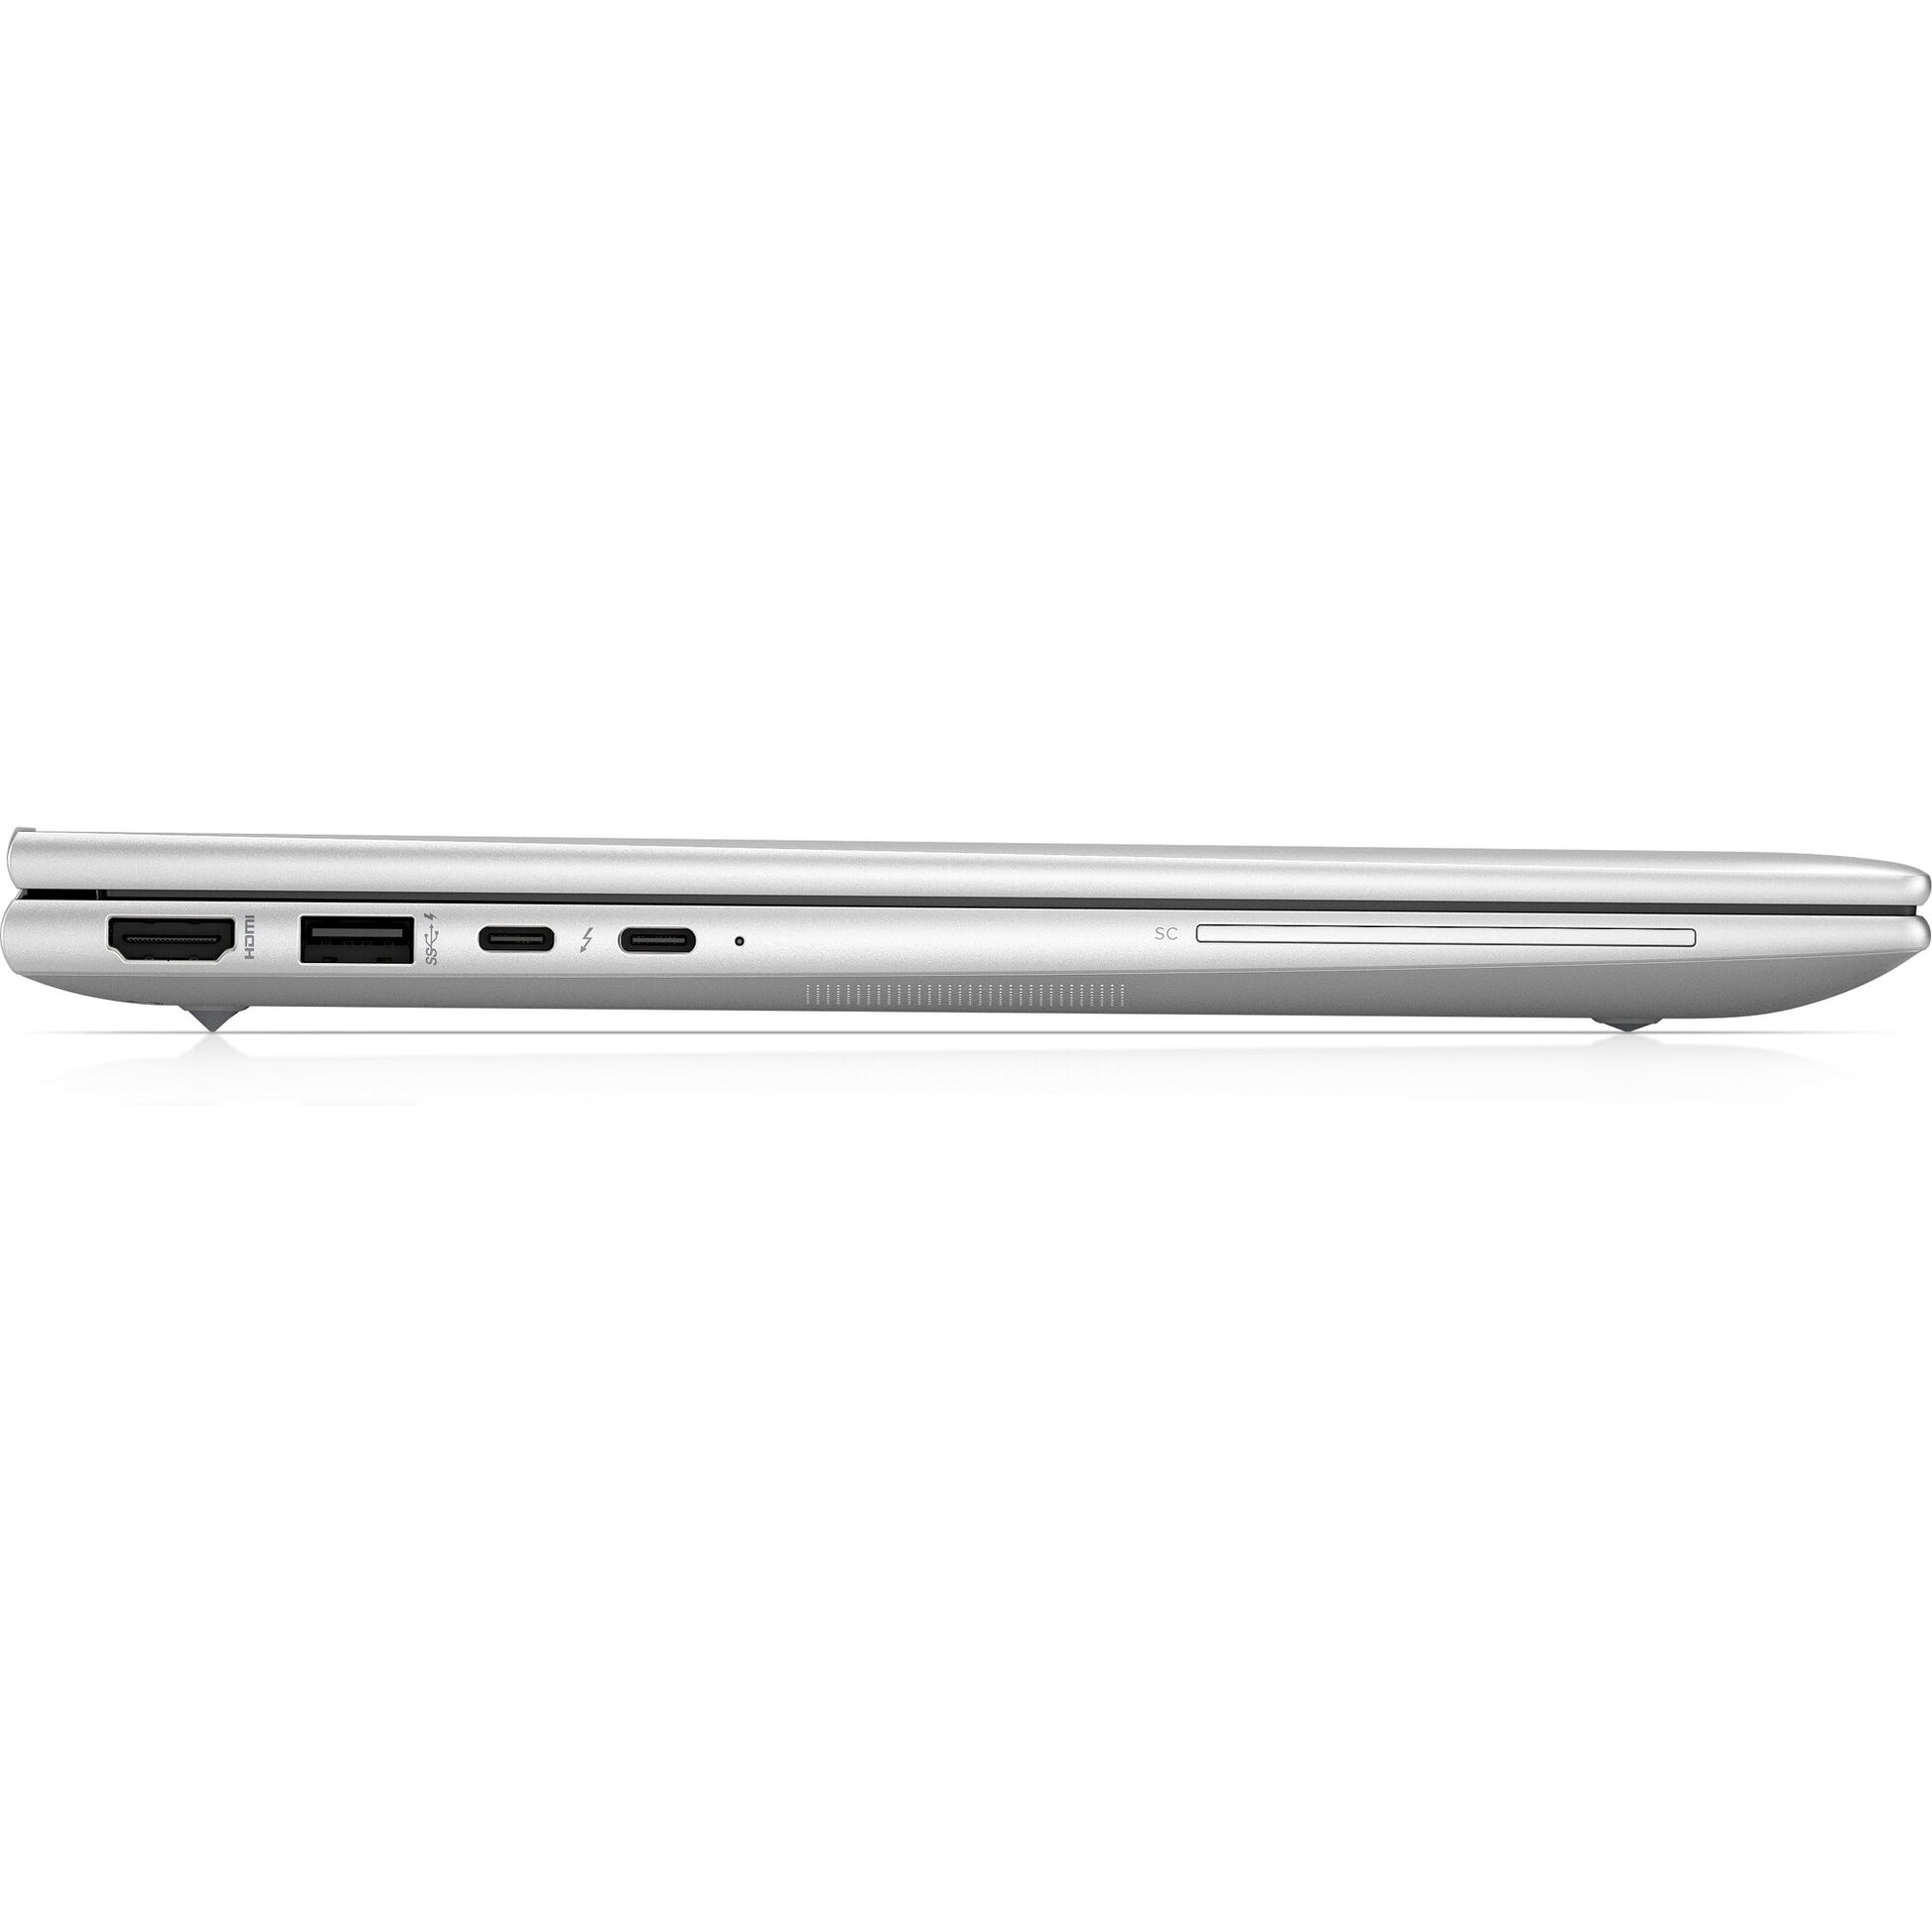 HP EliteBook 830 13 inch G9 Notebook PC